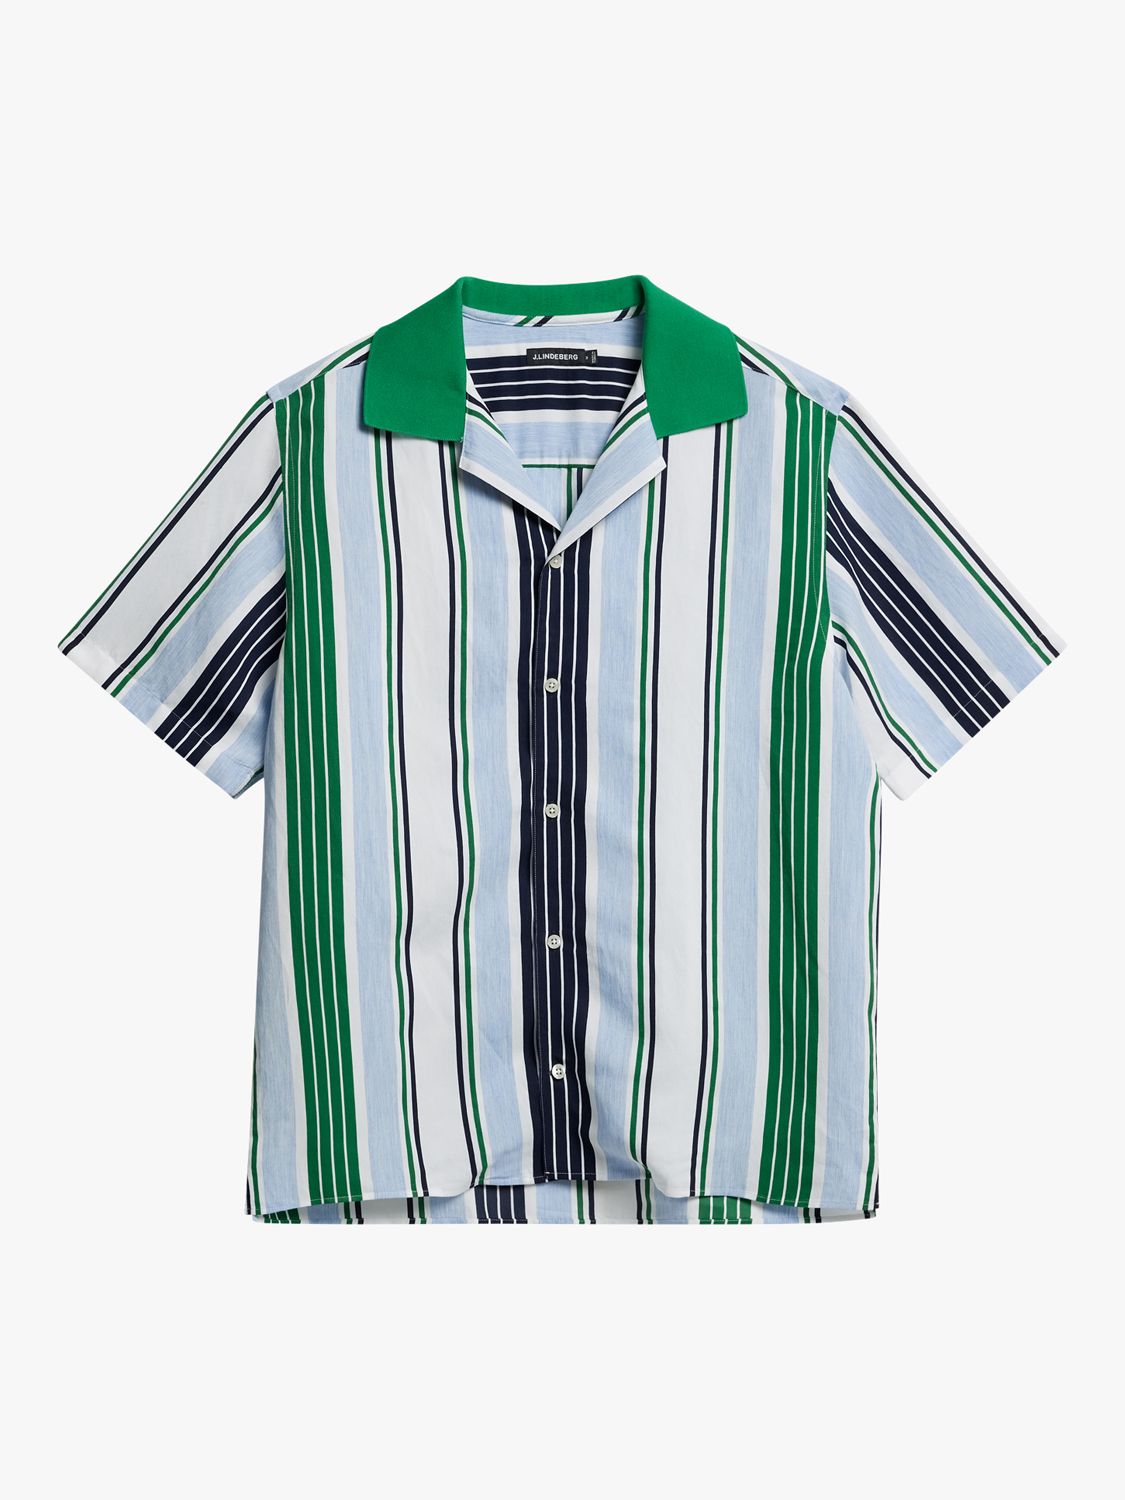 J.Lindeberg Skala Knit Collar Stripe Shirt, Blue/Multi, L